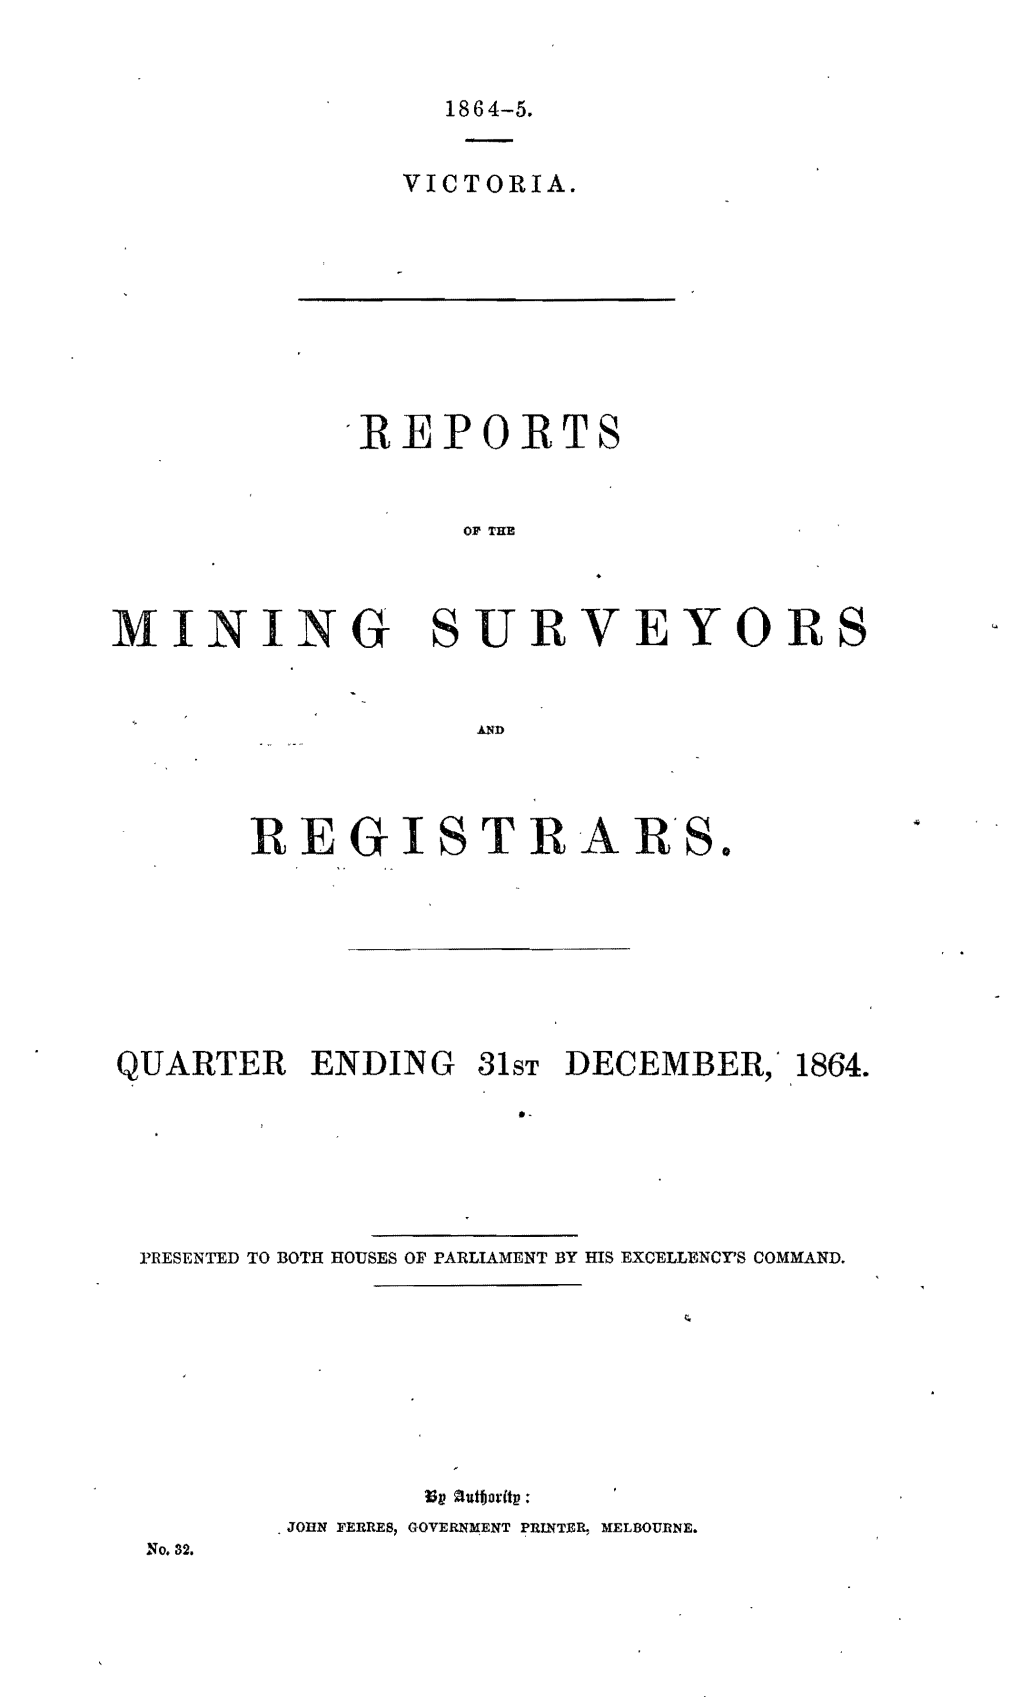 Mining Surveyors Reg 1St Ra R's 0